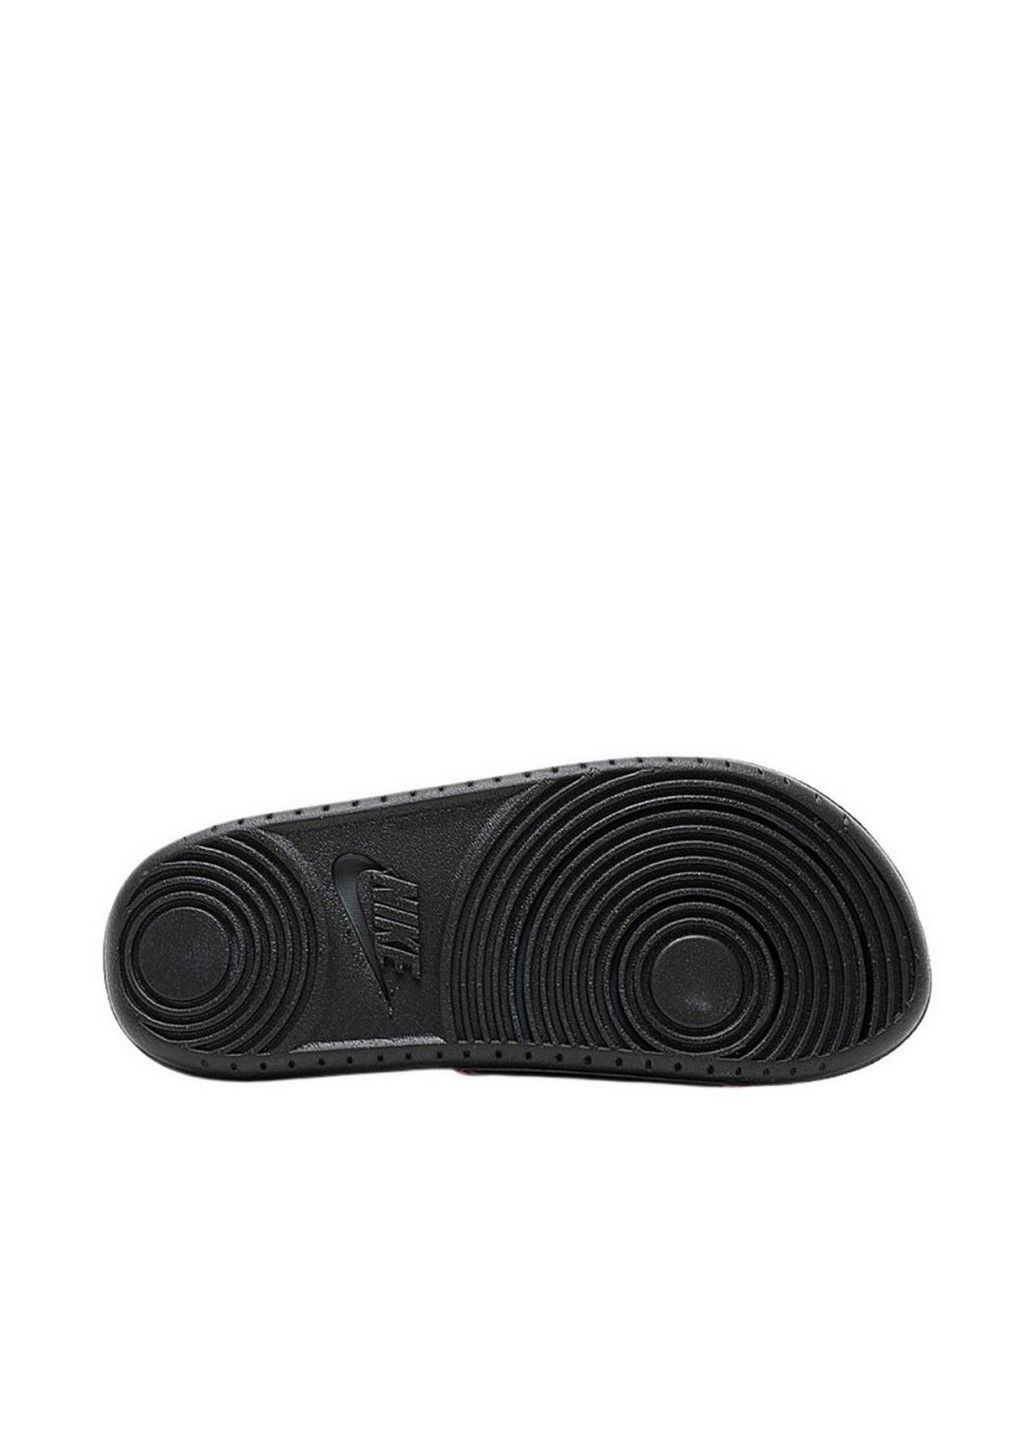 Черные тапочки (тапочки) wmns offcourt slide bq4632-010 Nike